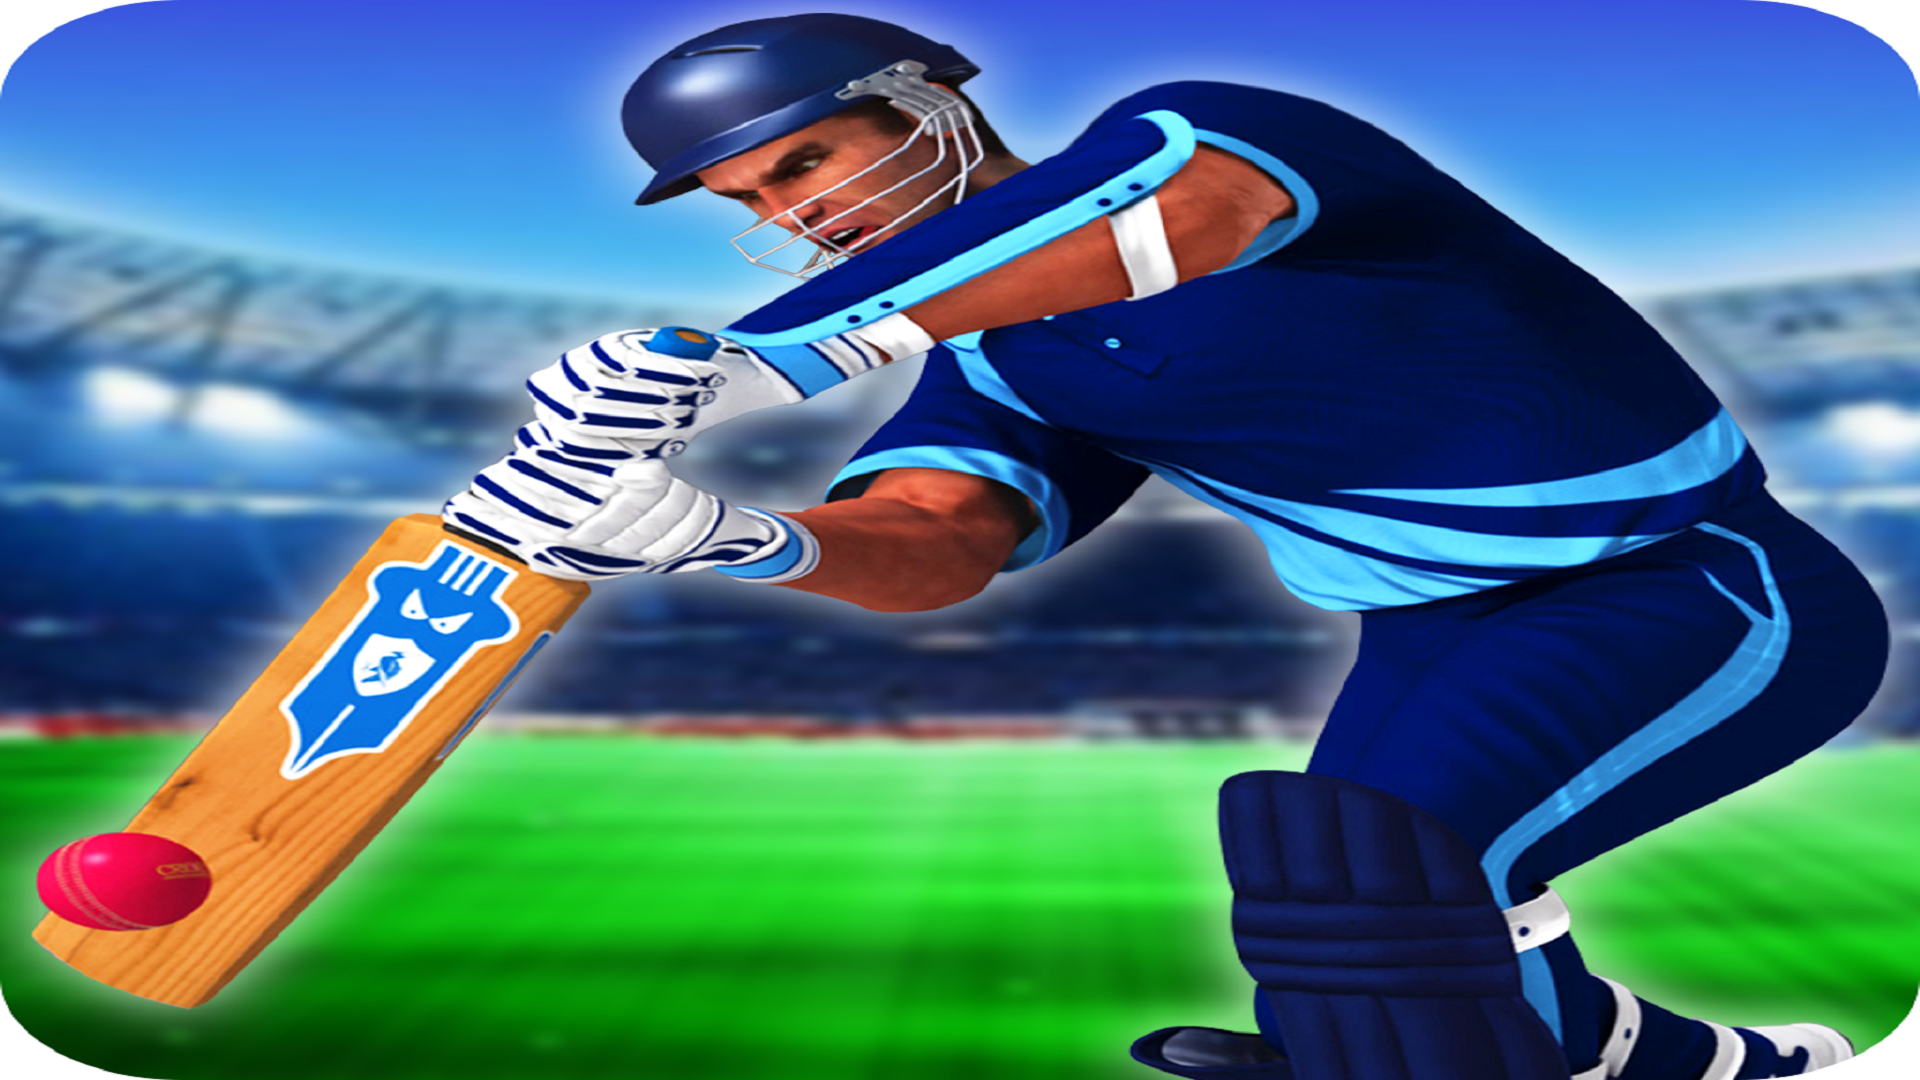 Screenshot of T20 World Cup Cricket Games